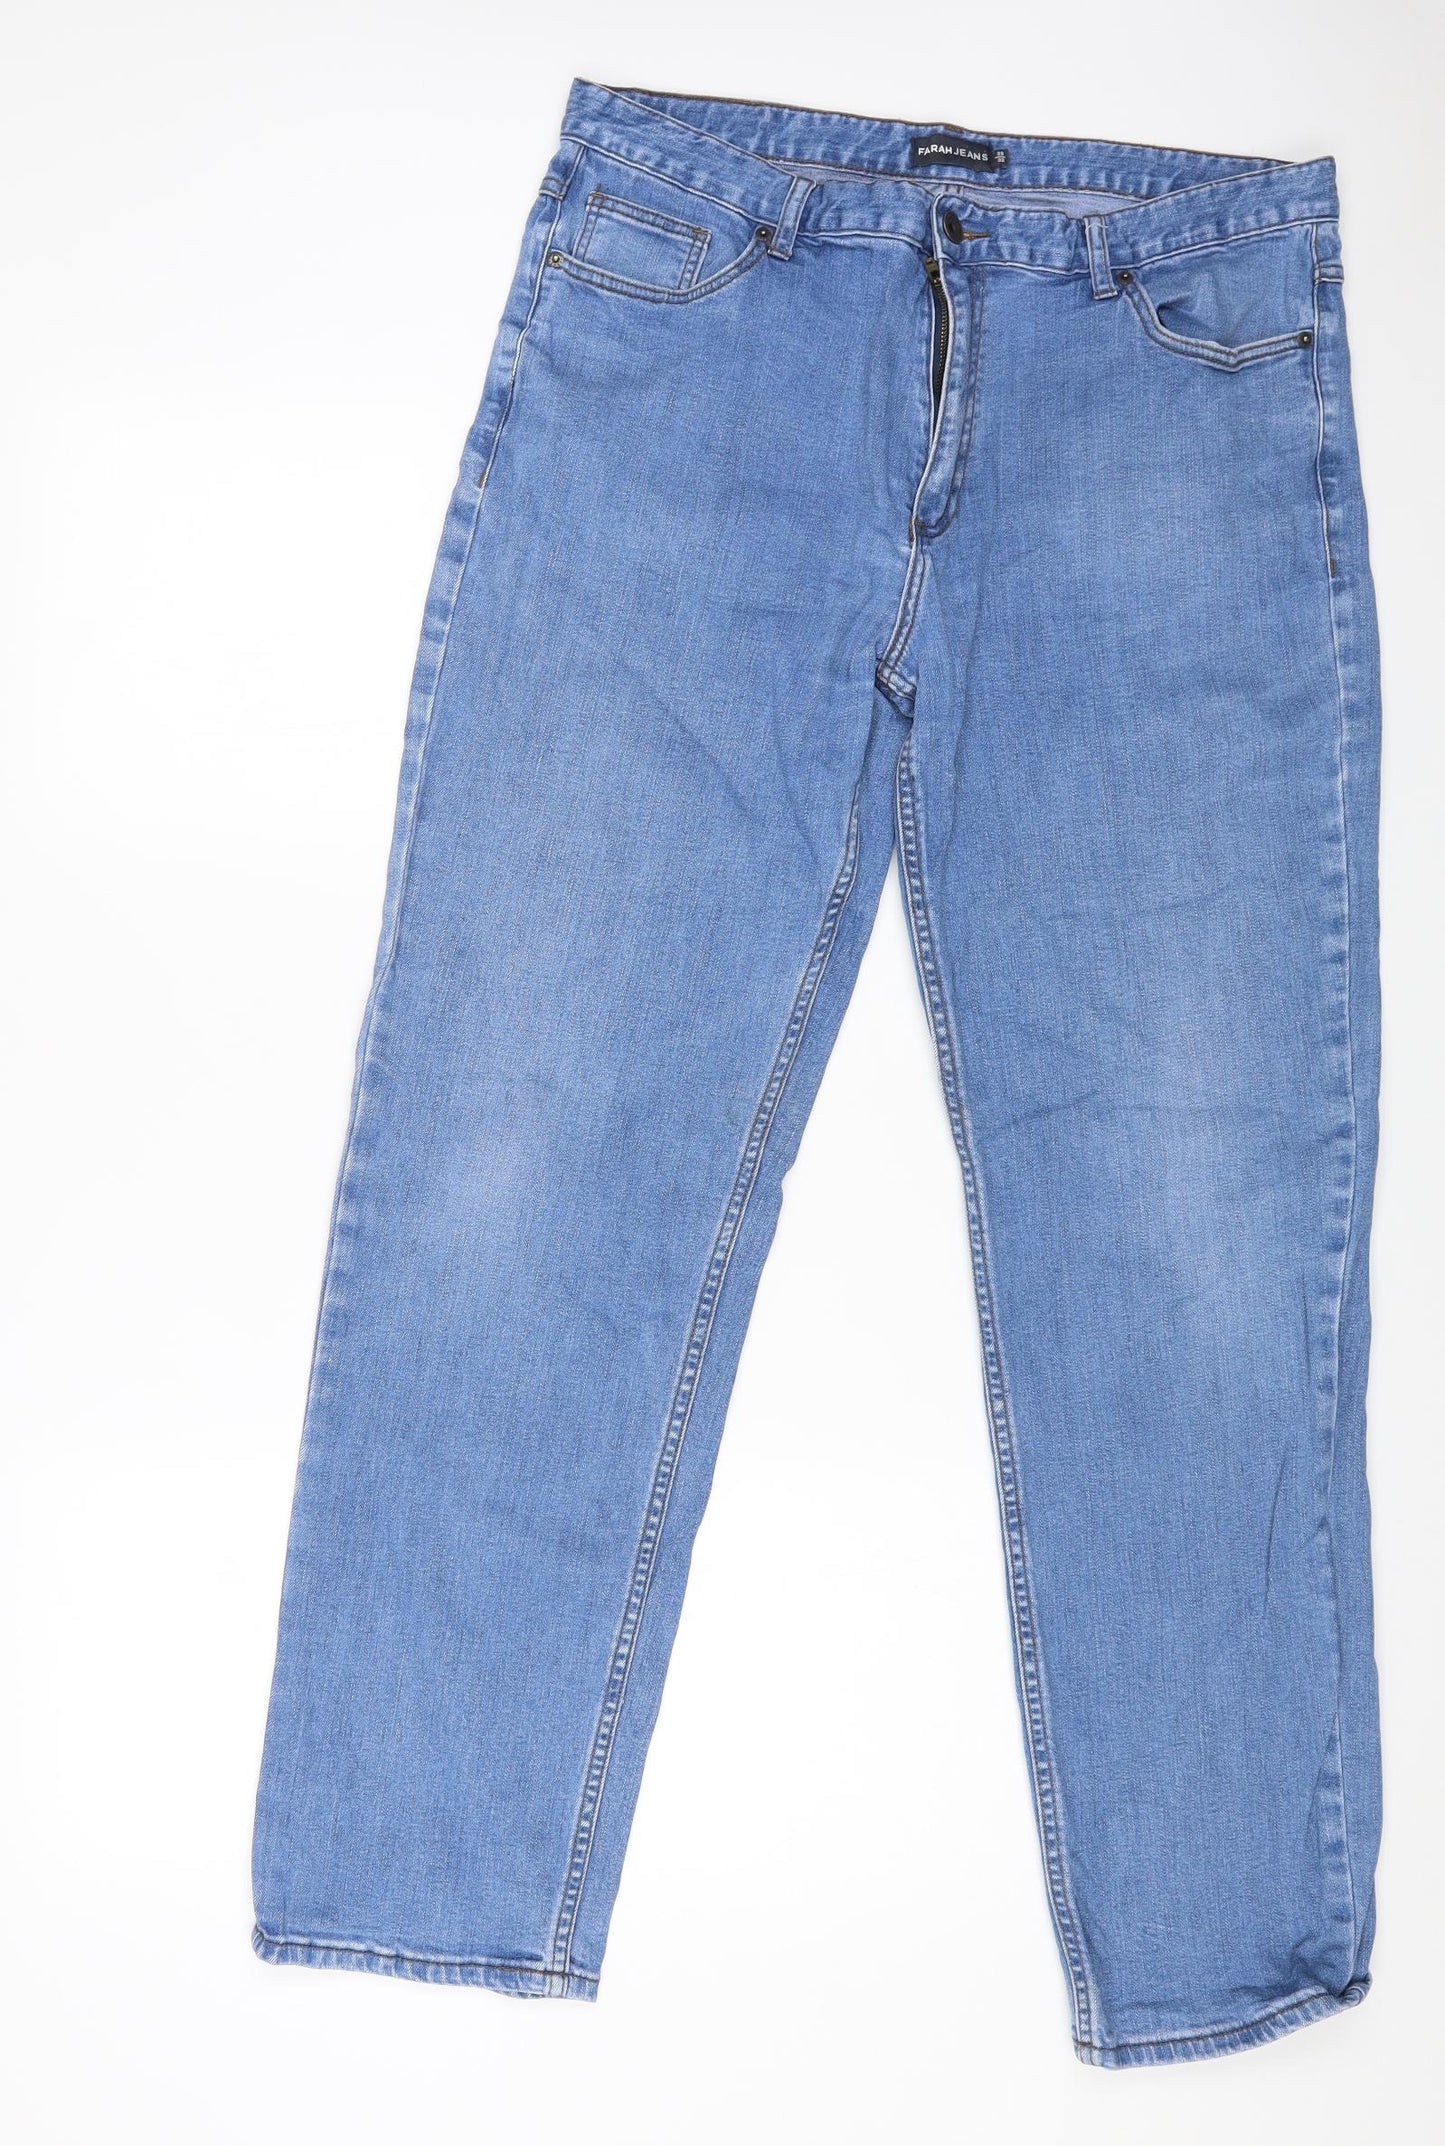 Farah Womens Blue Cotton Straight Jeans Size 38 in L30 in Regular Zip